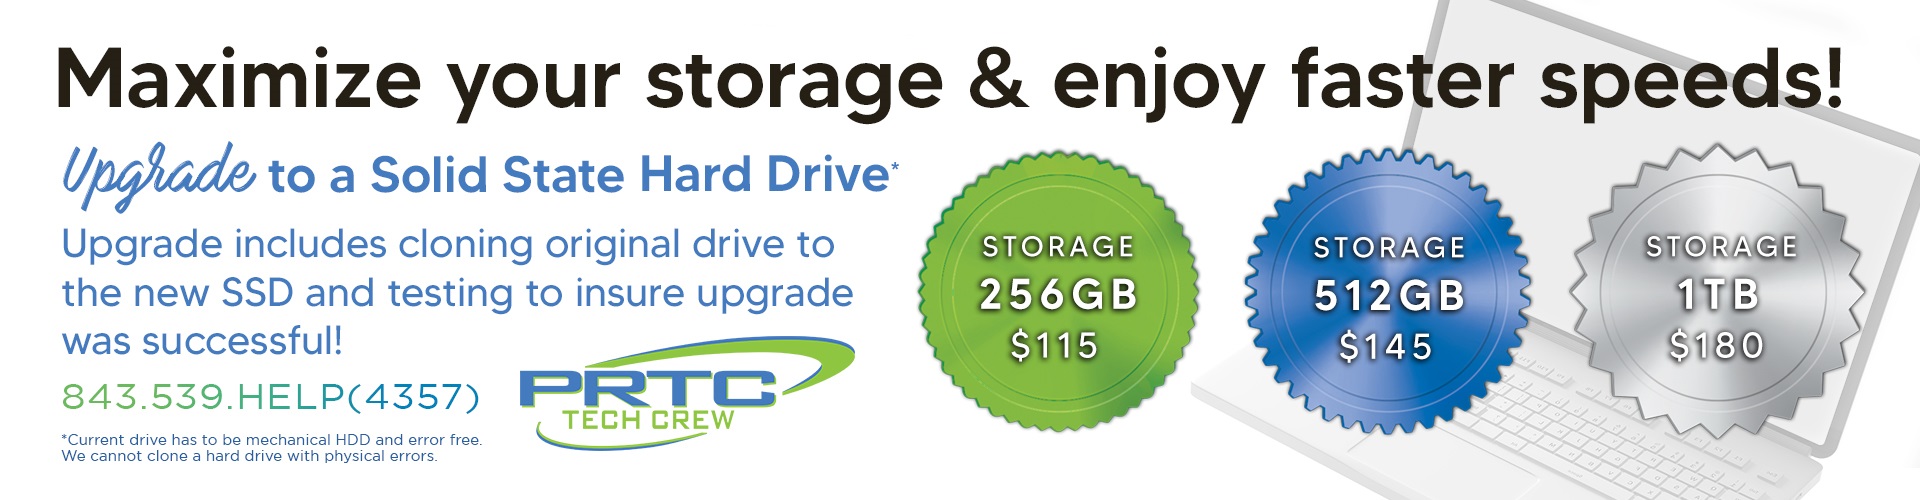 Maximize your storage & enjoy faster speeds!